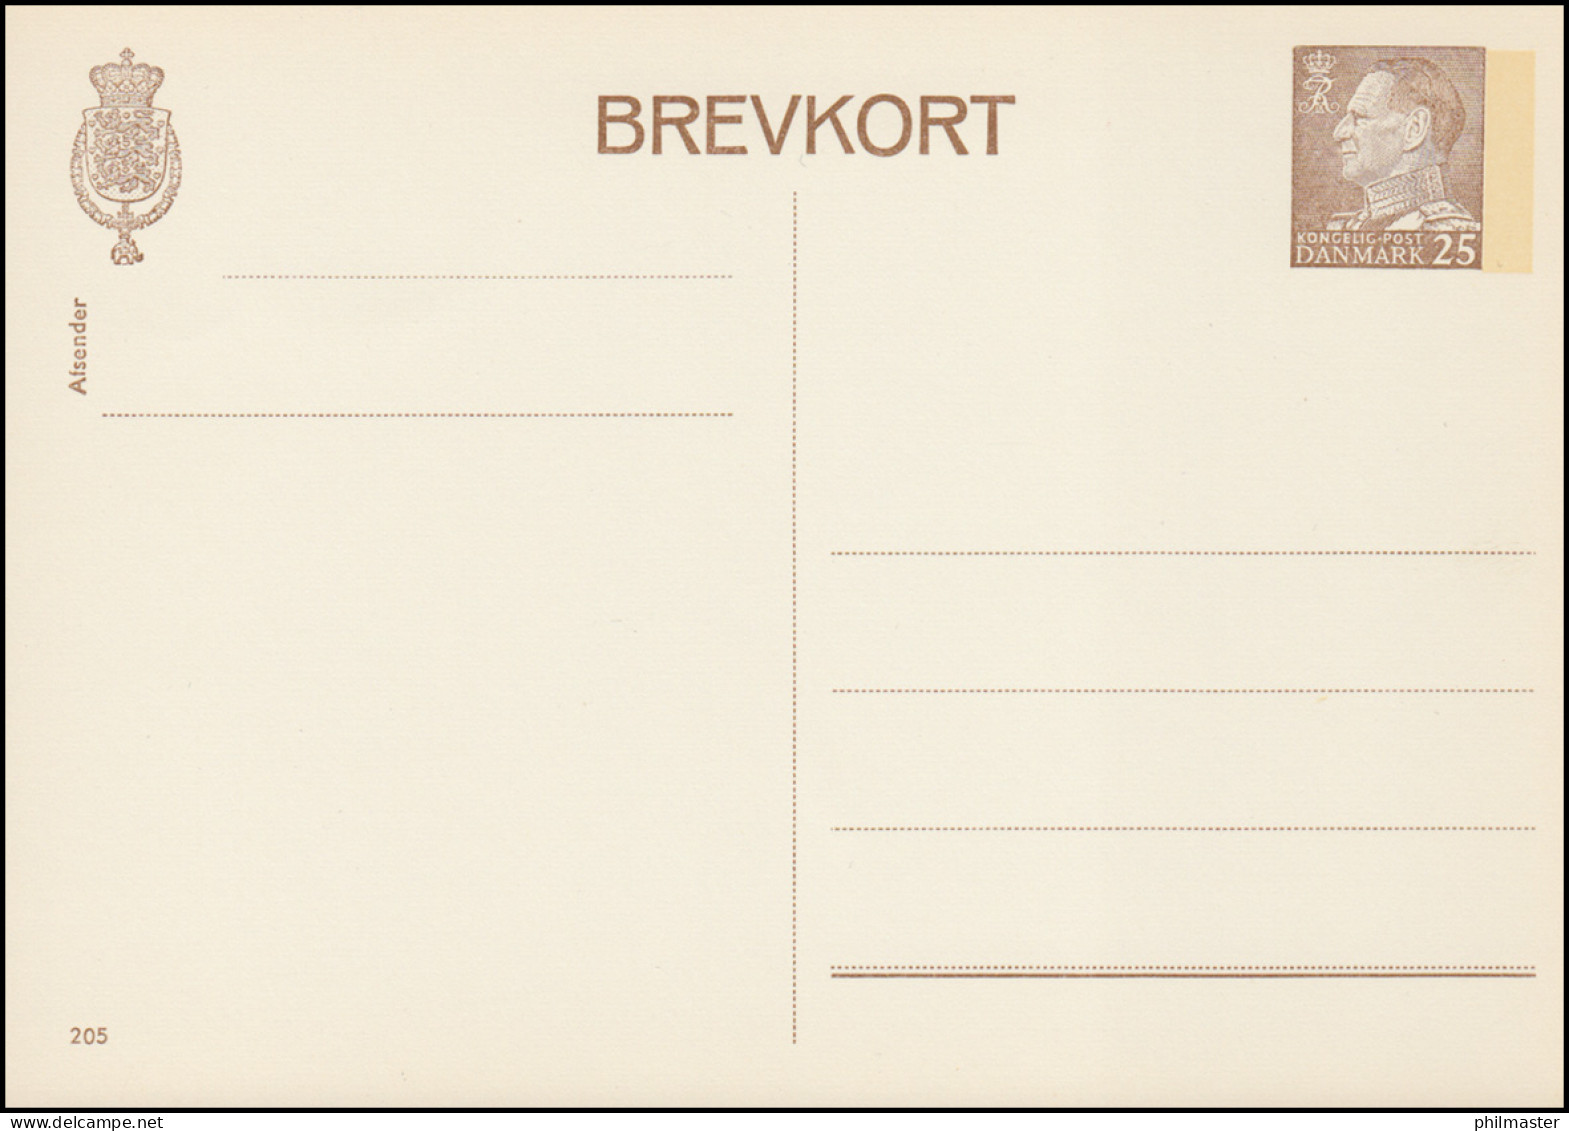 Dänemark Postkarte P 256 Frederik IX. 25 Öre, Kz. 205, ** - Entiers Postaux